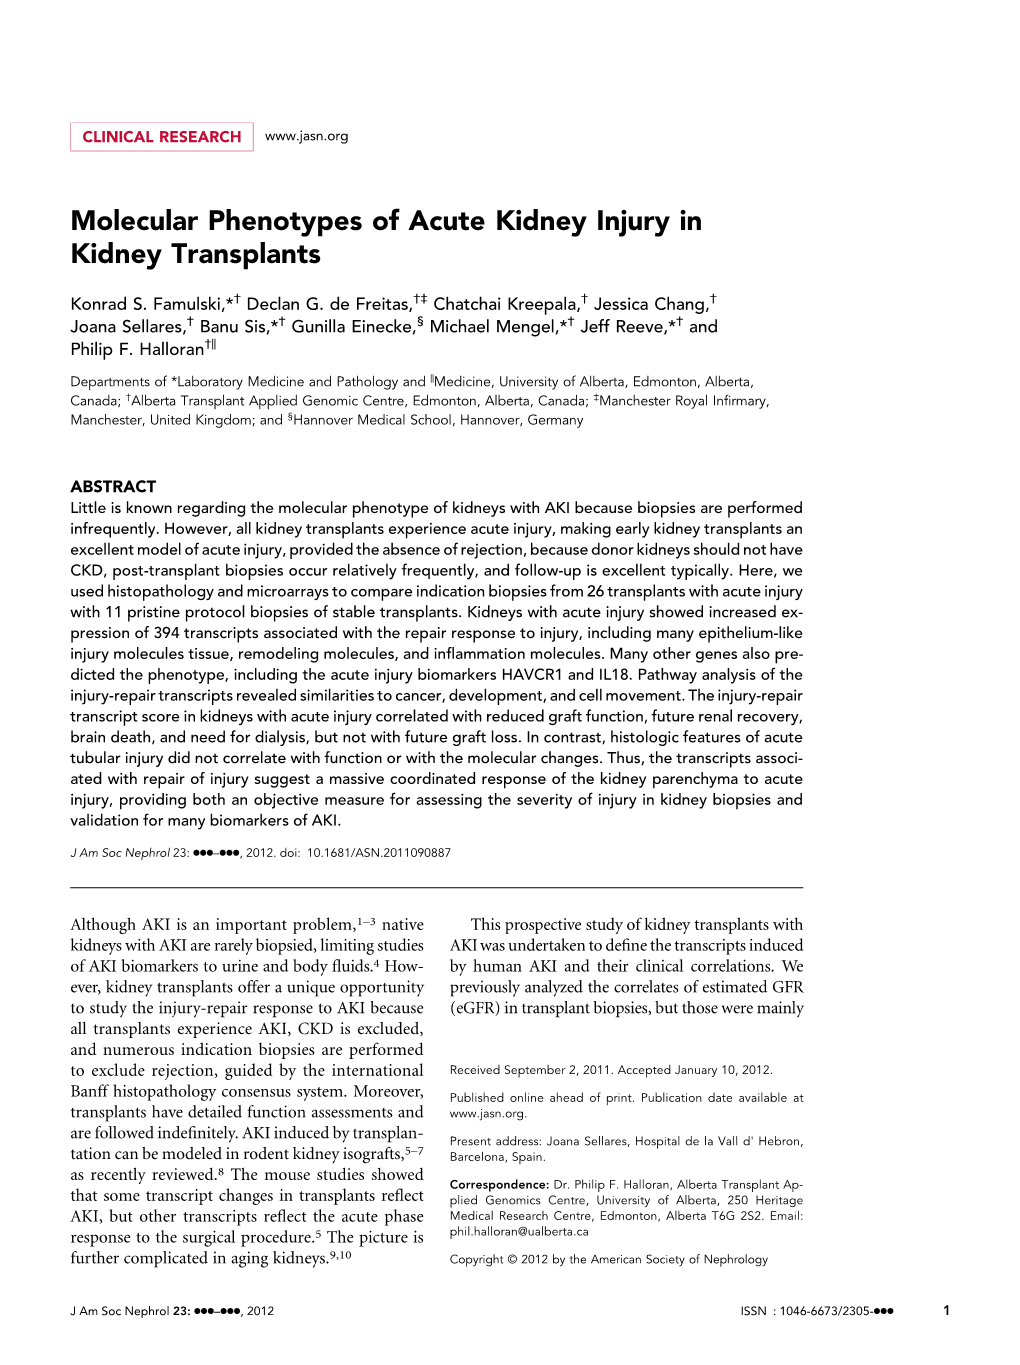 Molecular Phenotypes of Acute Kidney Injury in Kidney Transplants